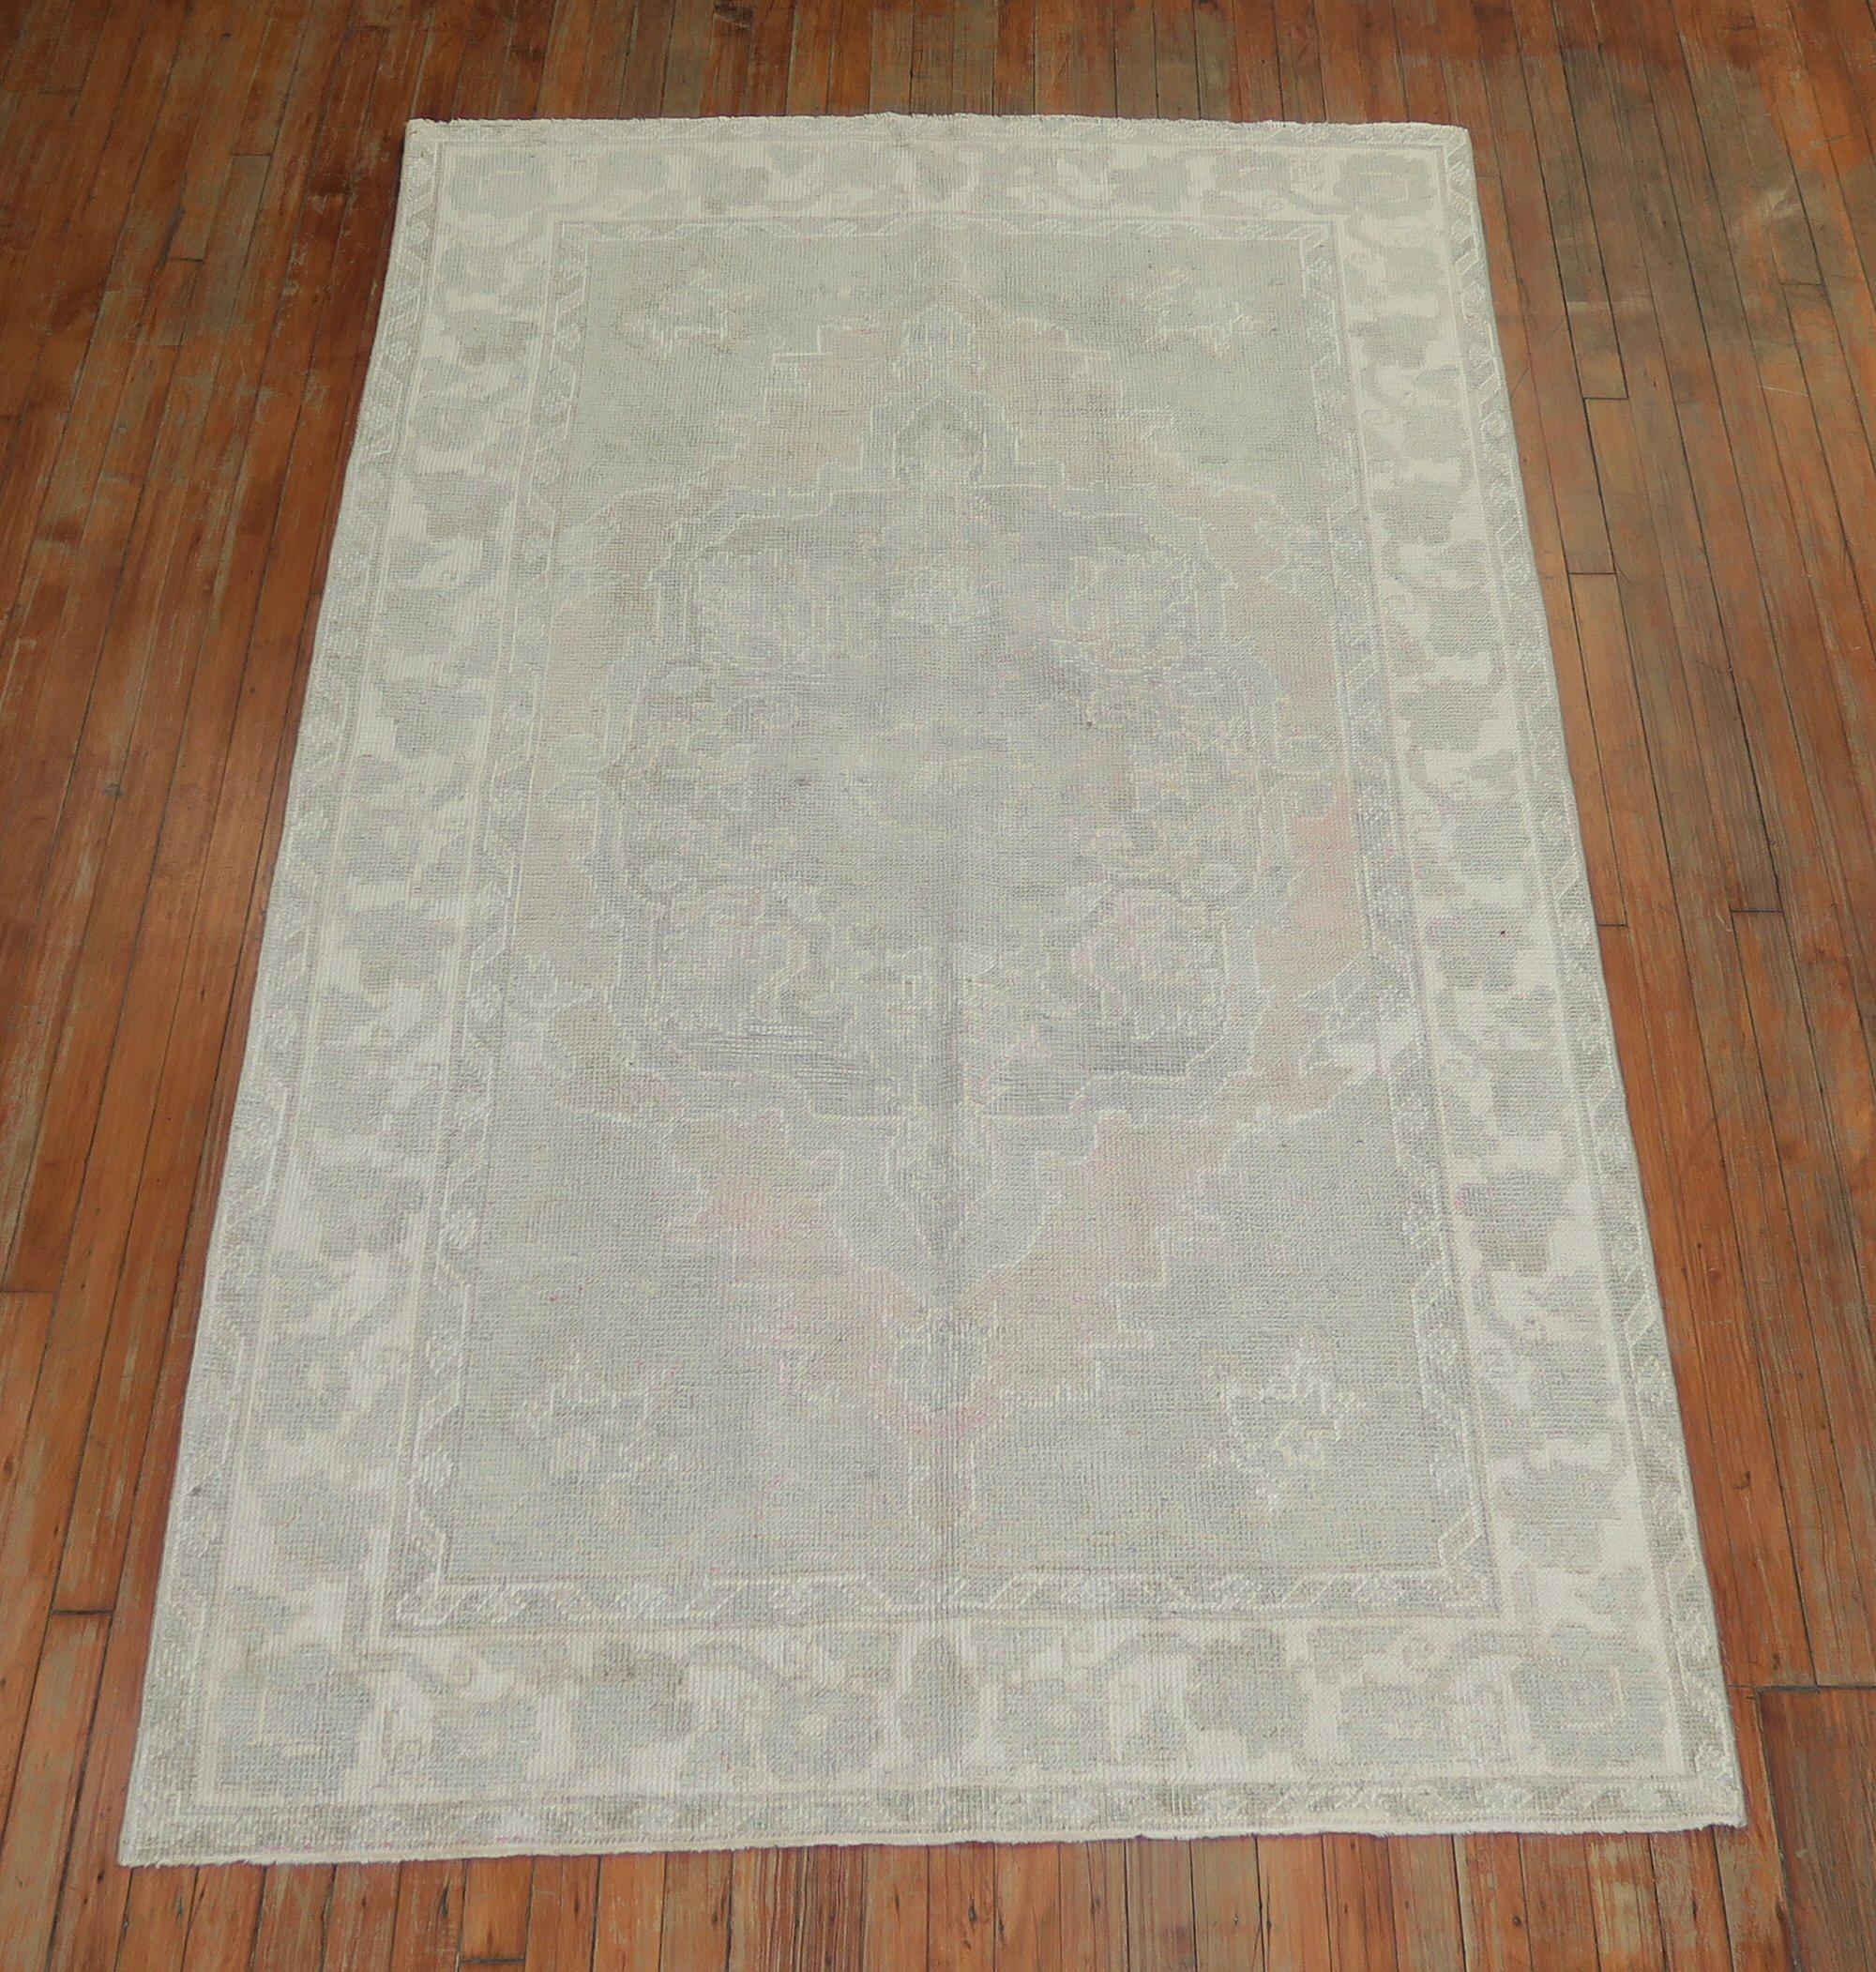 MId 20th century subtle color Turkish Oushak rug

Measures: 4'10'' x 8'.